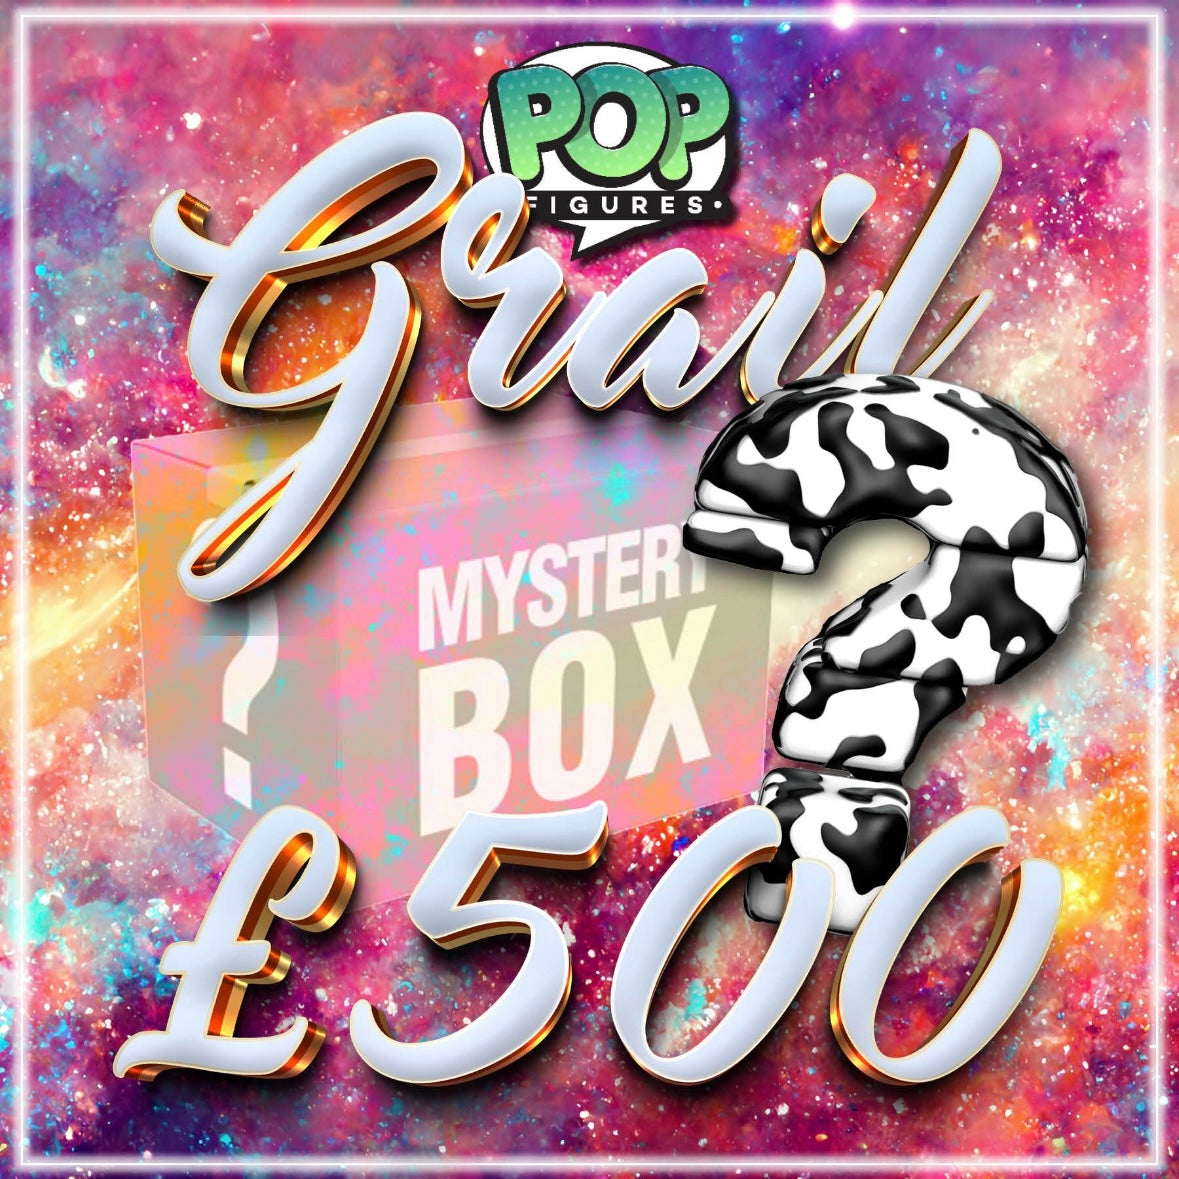 £500 Guaranteed Grail Funko Pop Mystery Box!